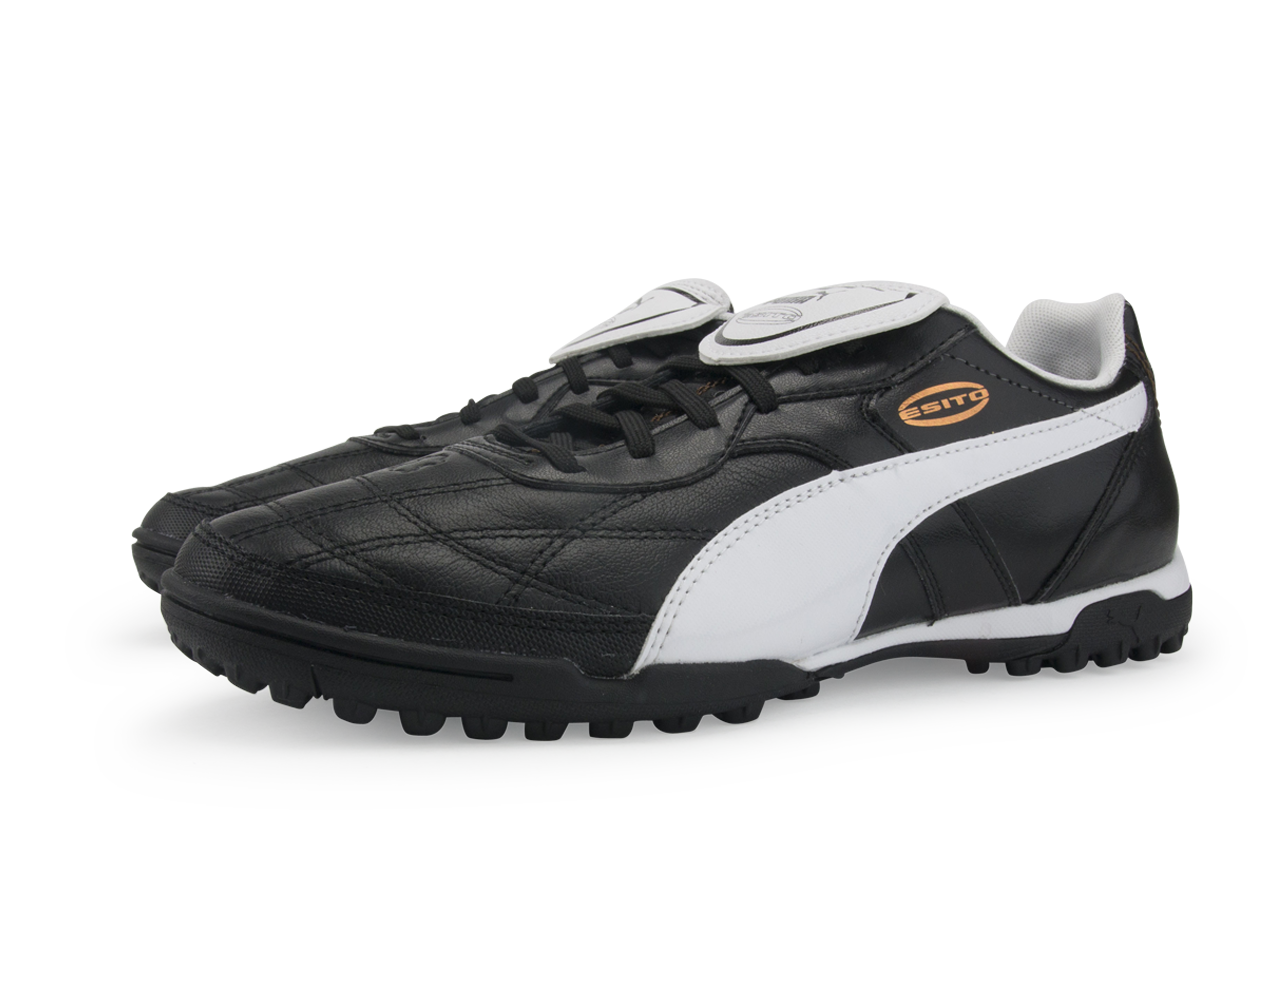 PUMA Men's Esito Classico Turf Soccer Shoes  Black/White/Bronze